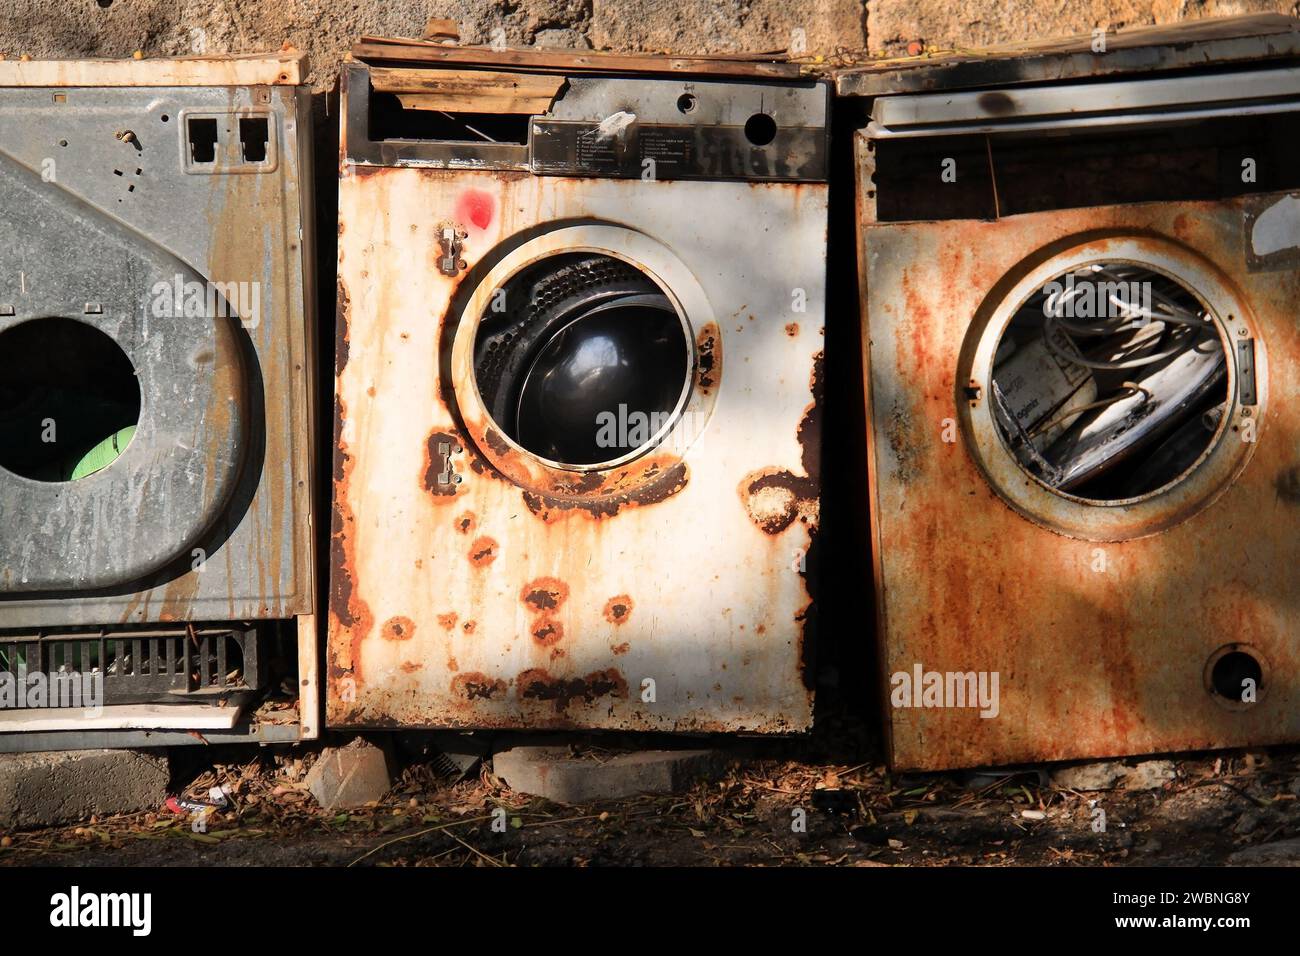 Abandoned rusty washing machines in nature. Stock Photo